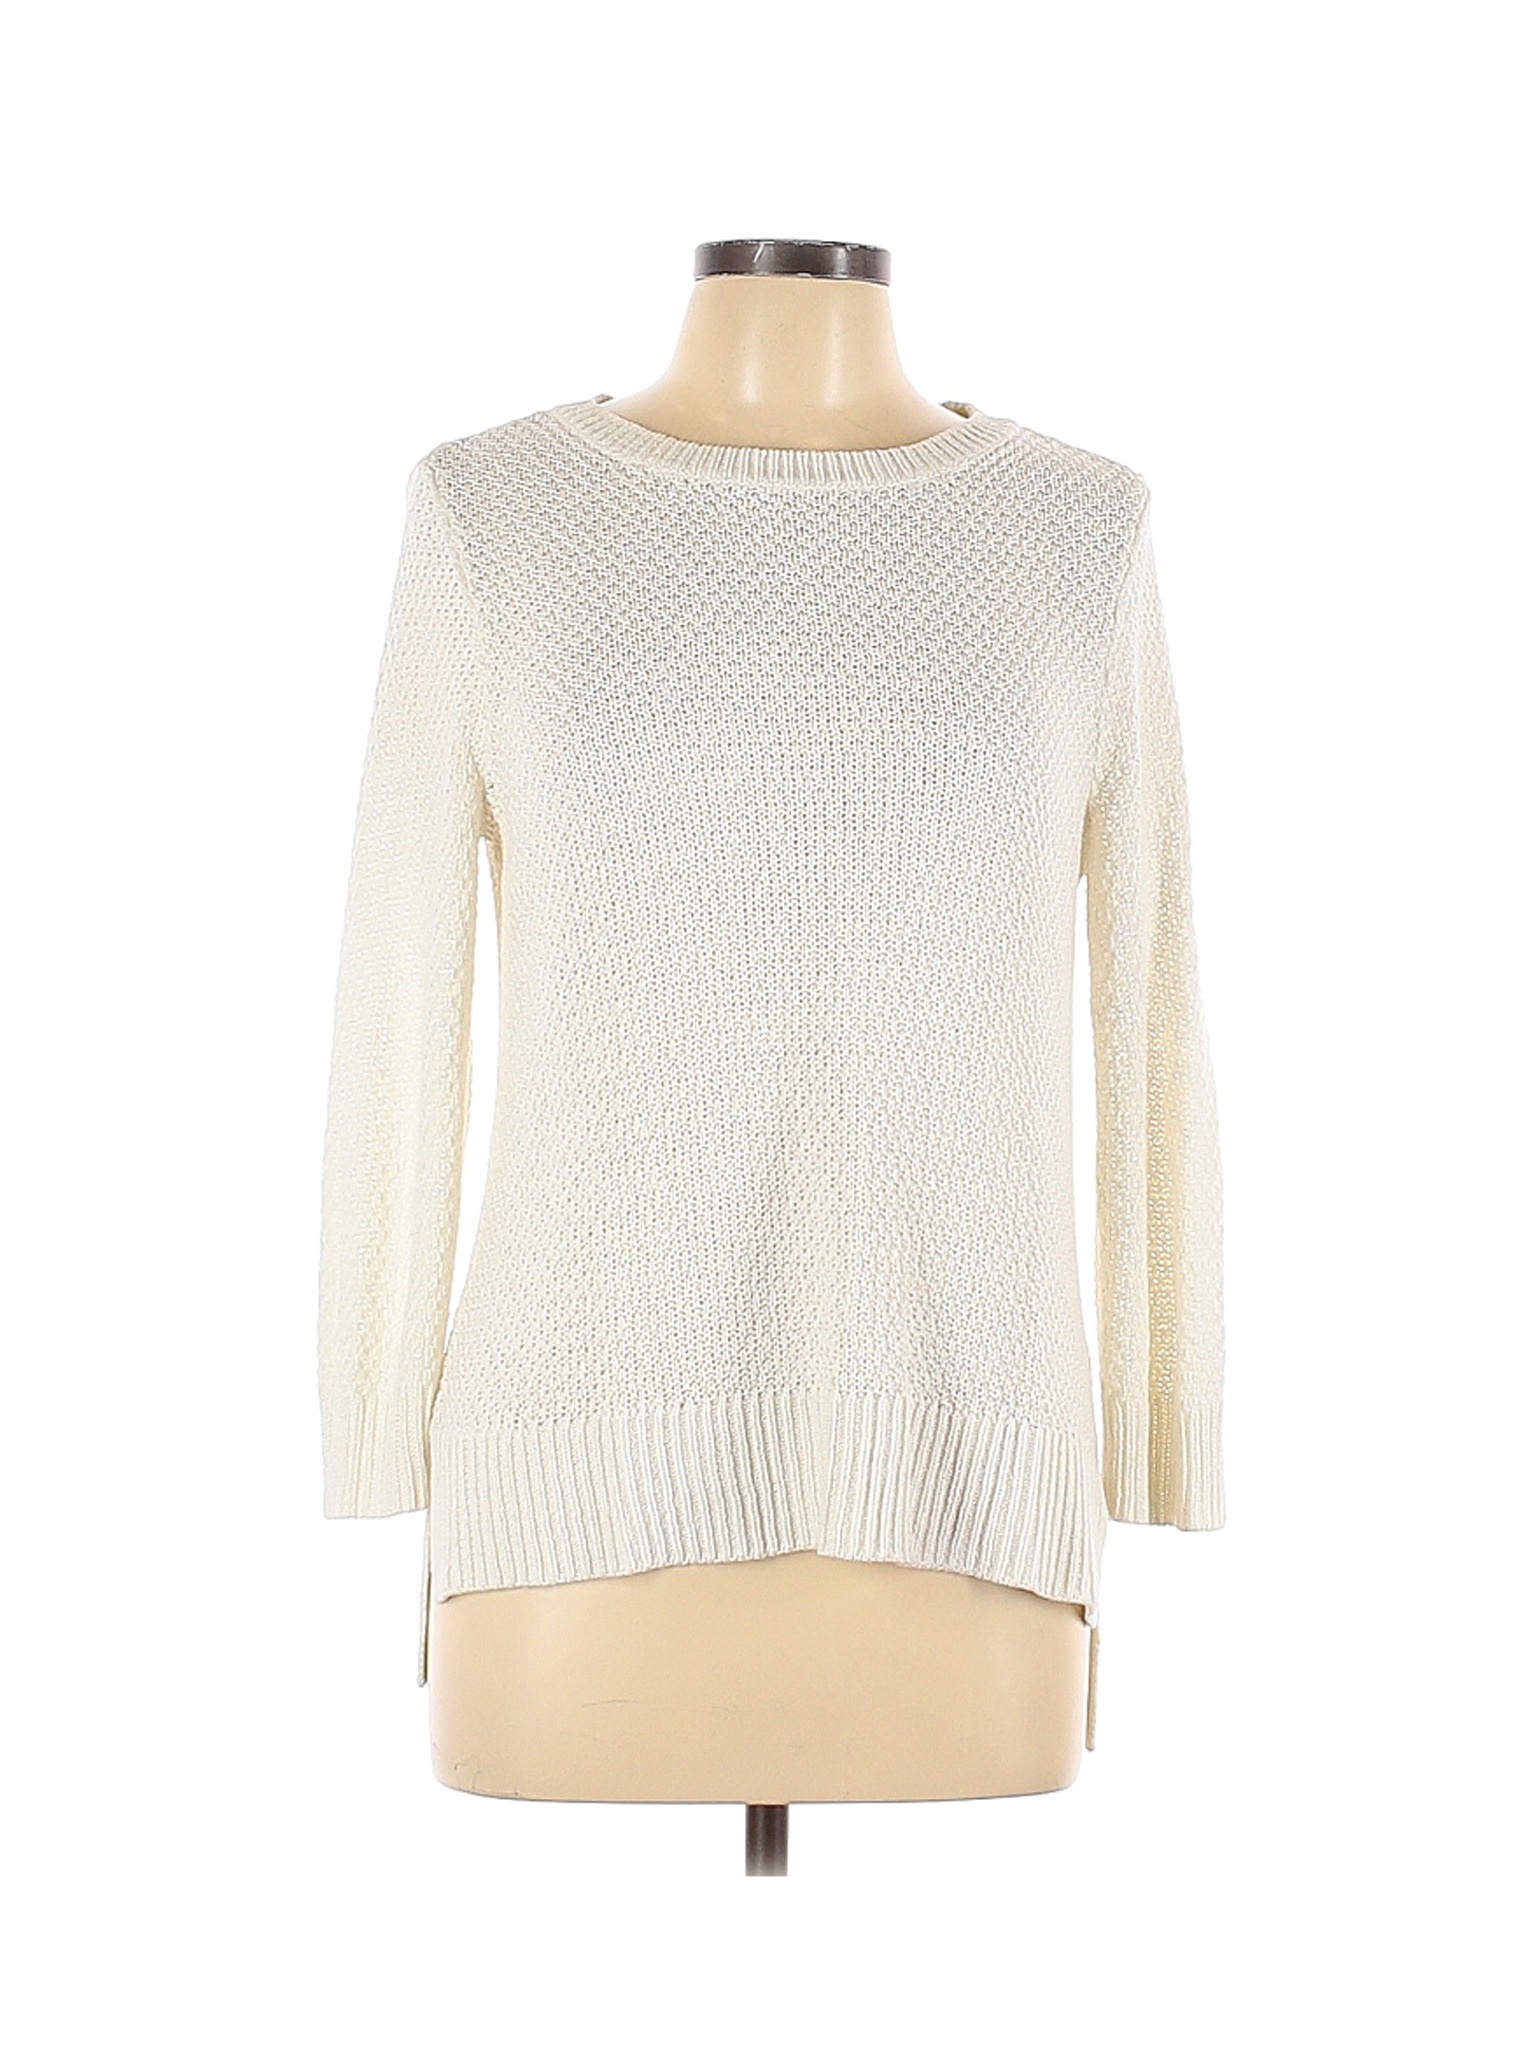 Lauren by Ralph Lauren Women White Pullover Sweater L | eBay